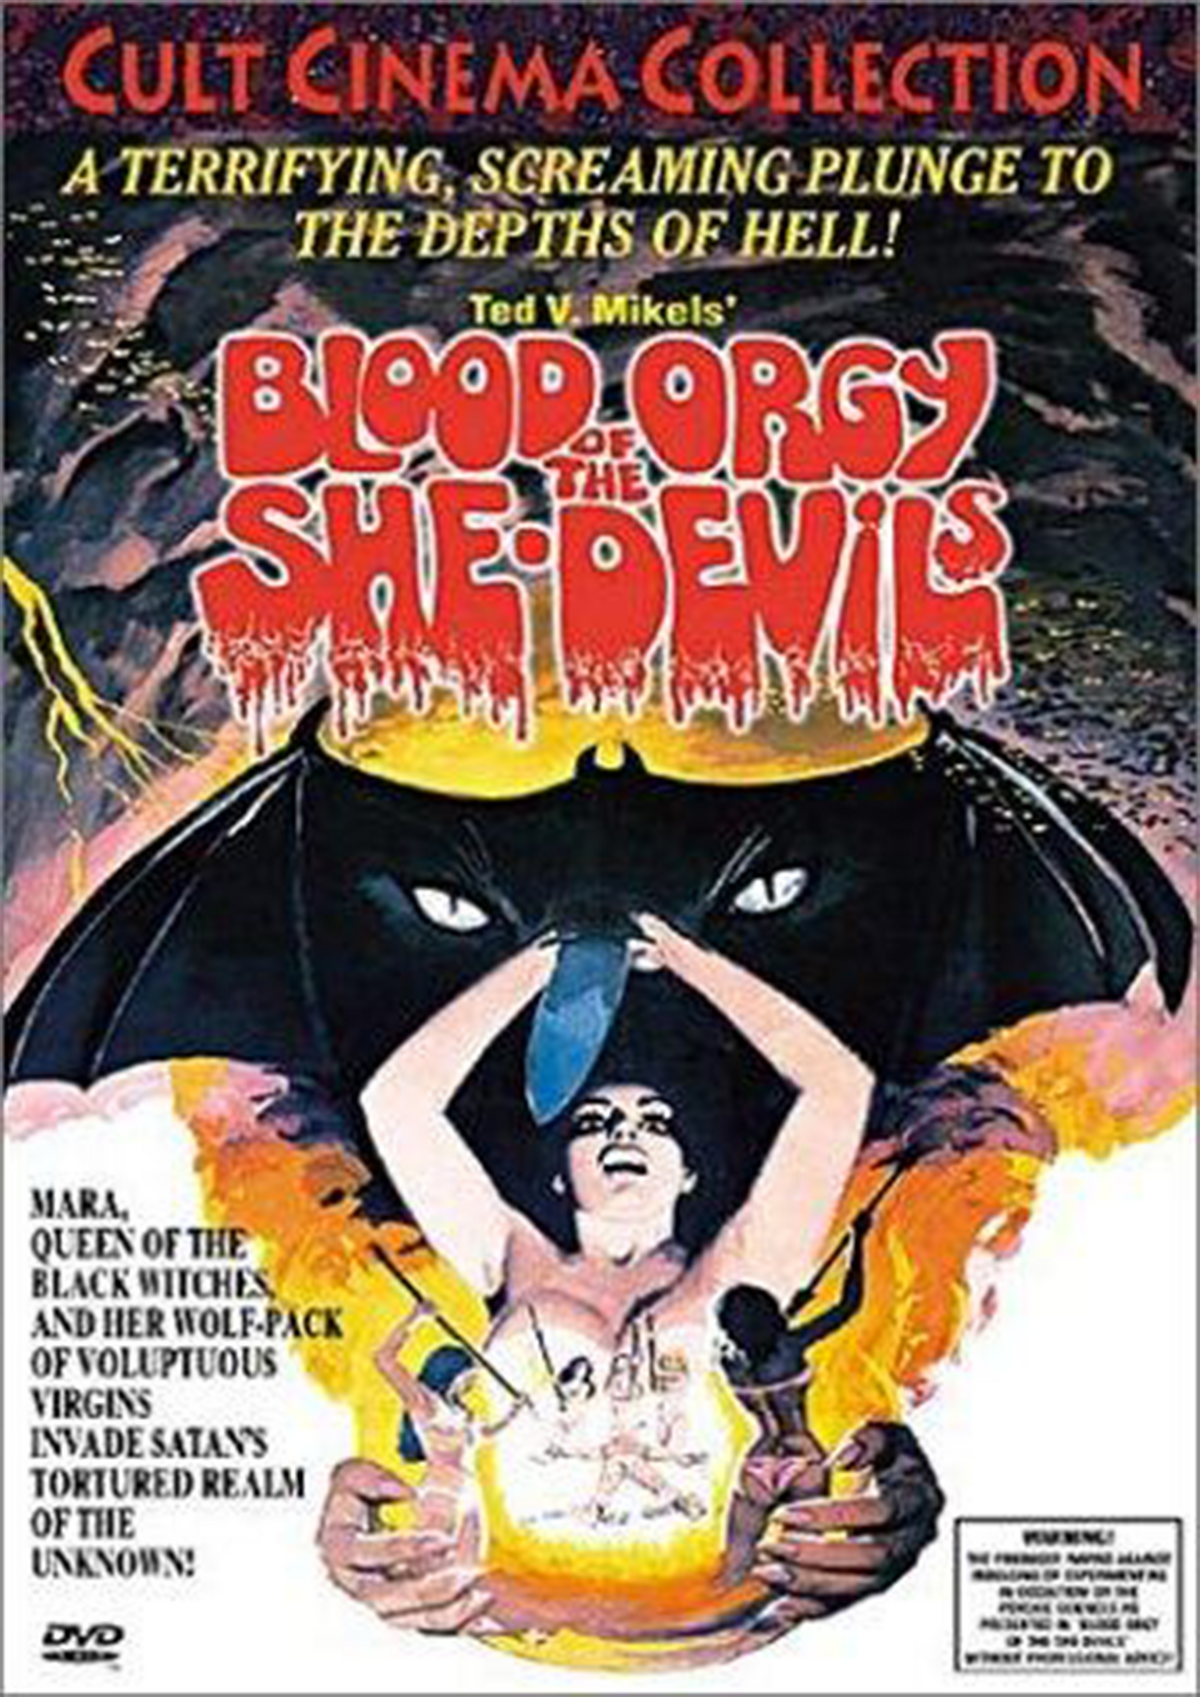 Blood Orgy of the She-Devils (1973) | Hammer horror Wiki | Fandom